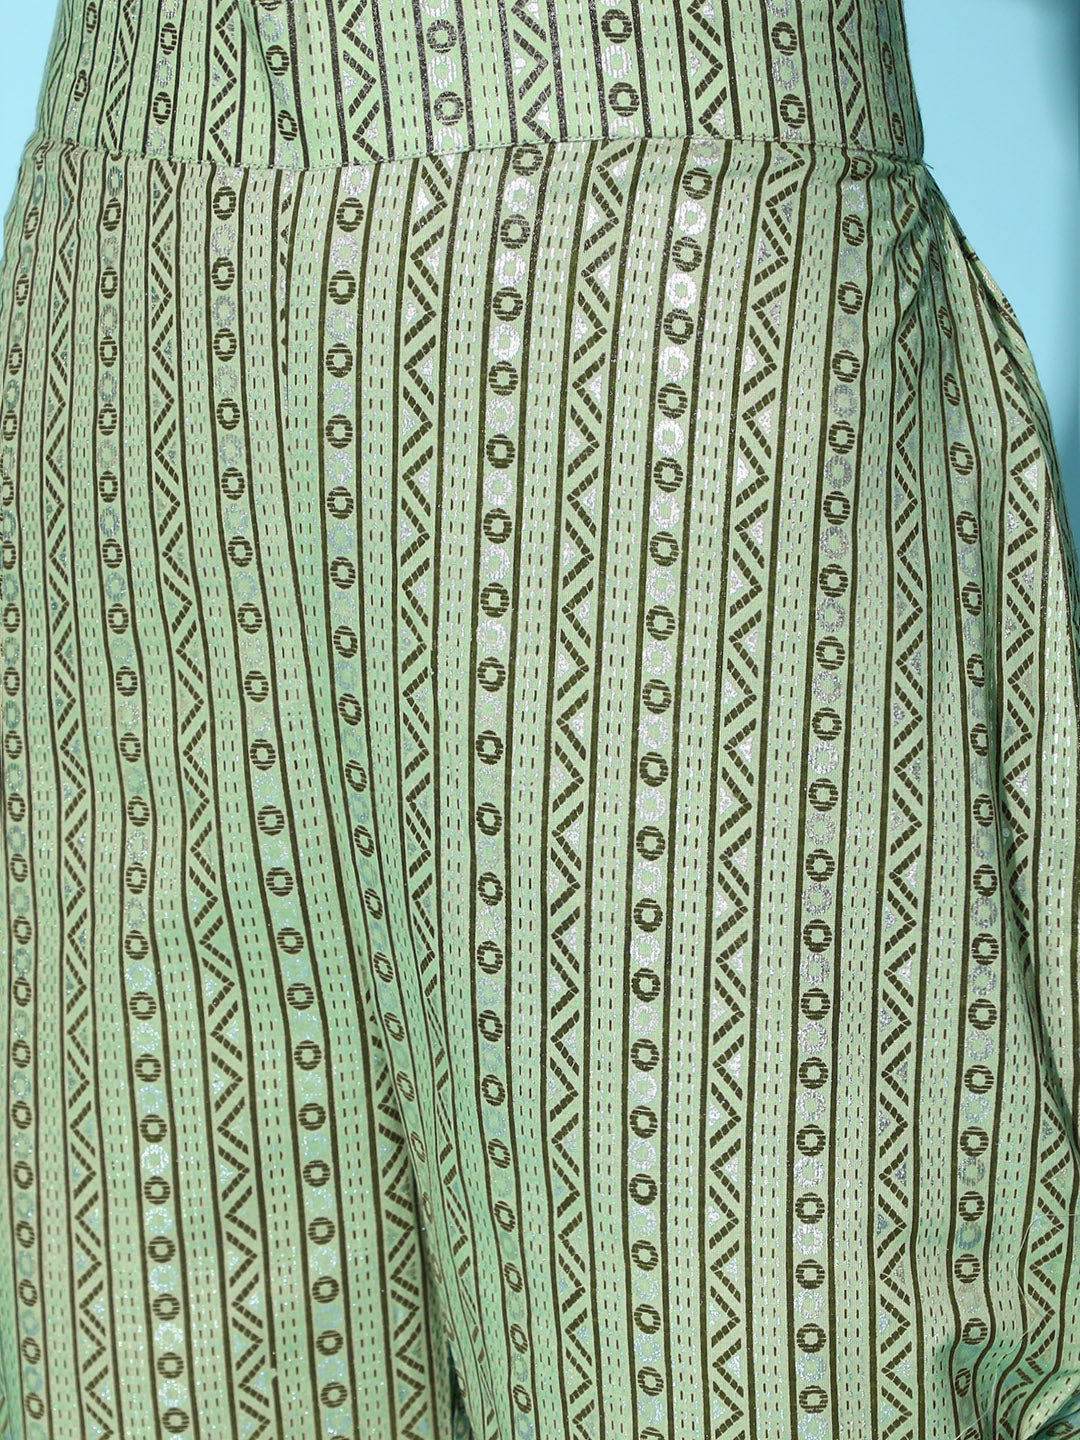 Women's Mint Green Color Foil Print Kaftan Style Kurta And Pant Set - Ziyaa